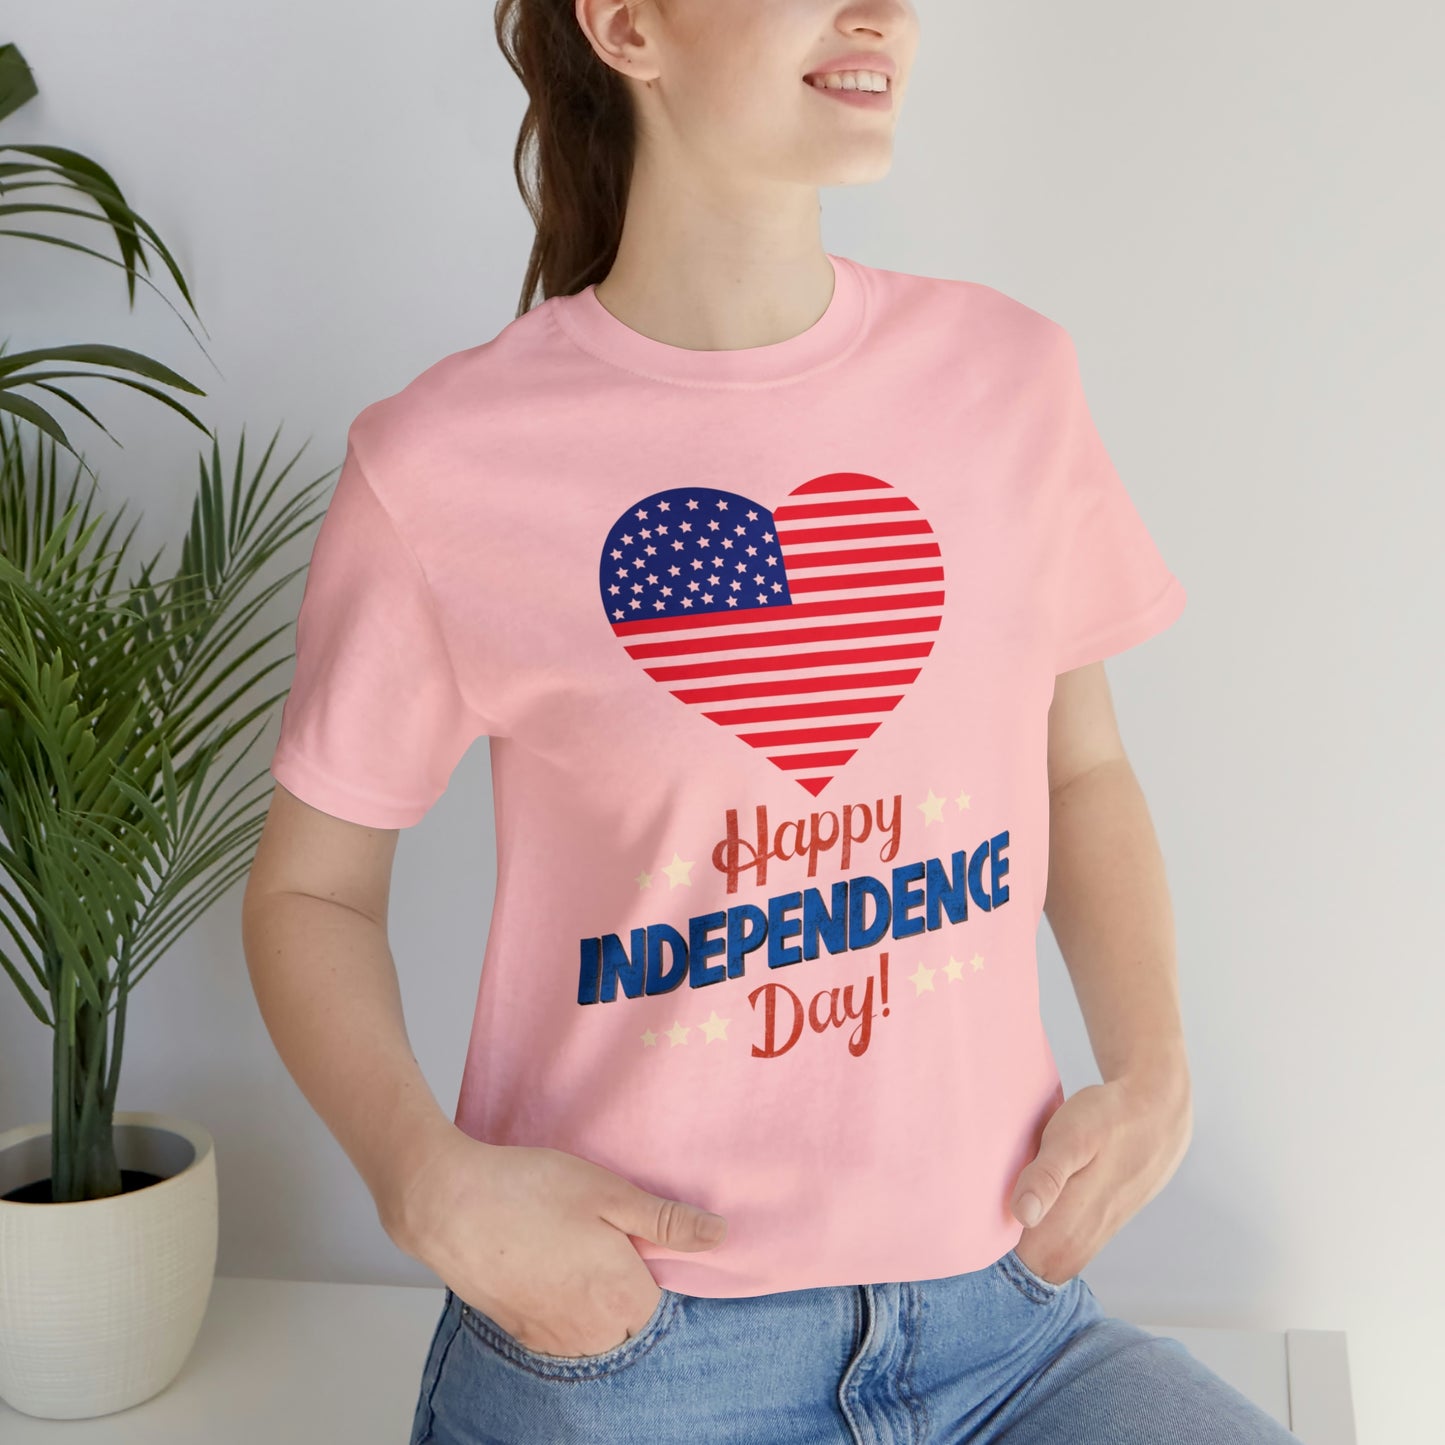 Happy Independence Day shirt, American flag shirt, Red, white, and blue shirt, Patriotic shirt, USA shirt